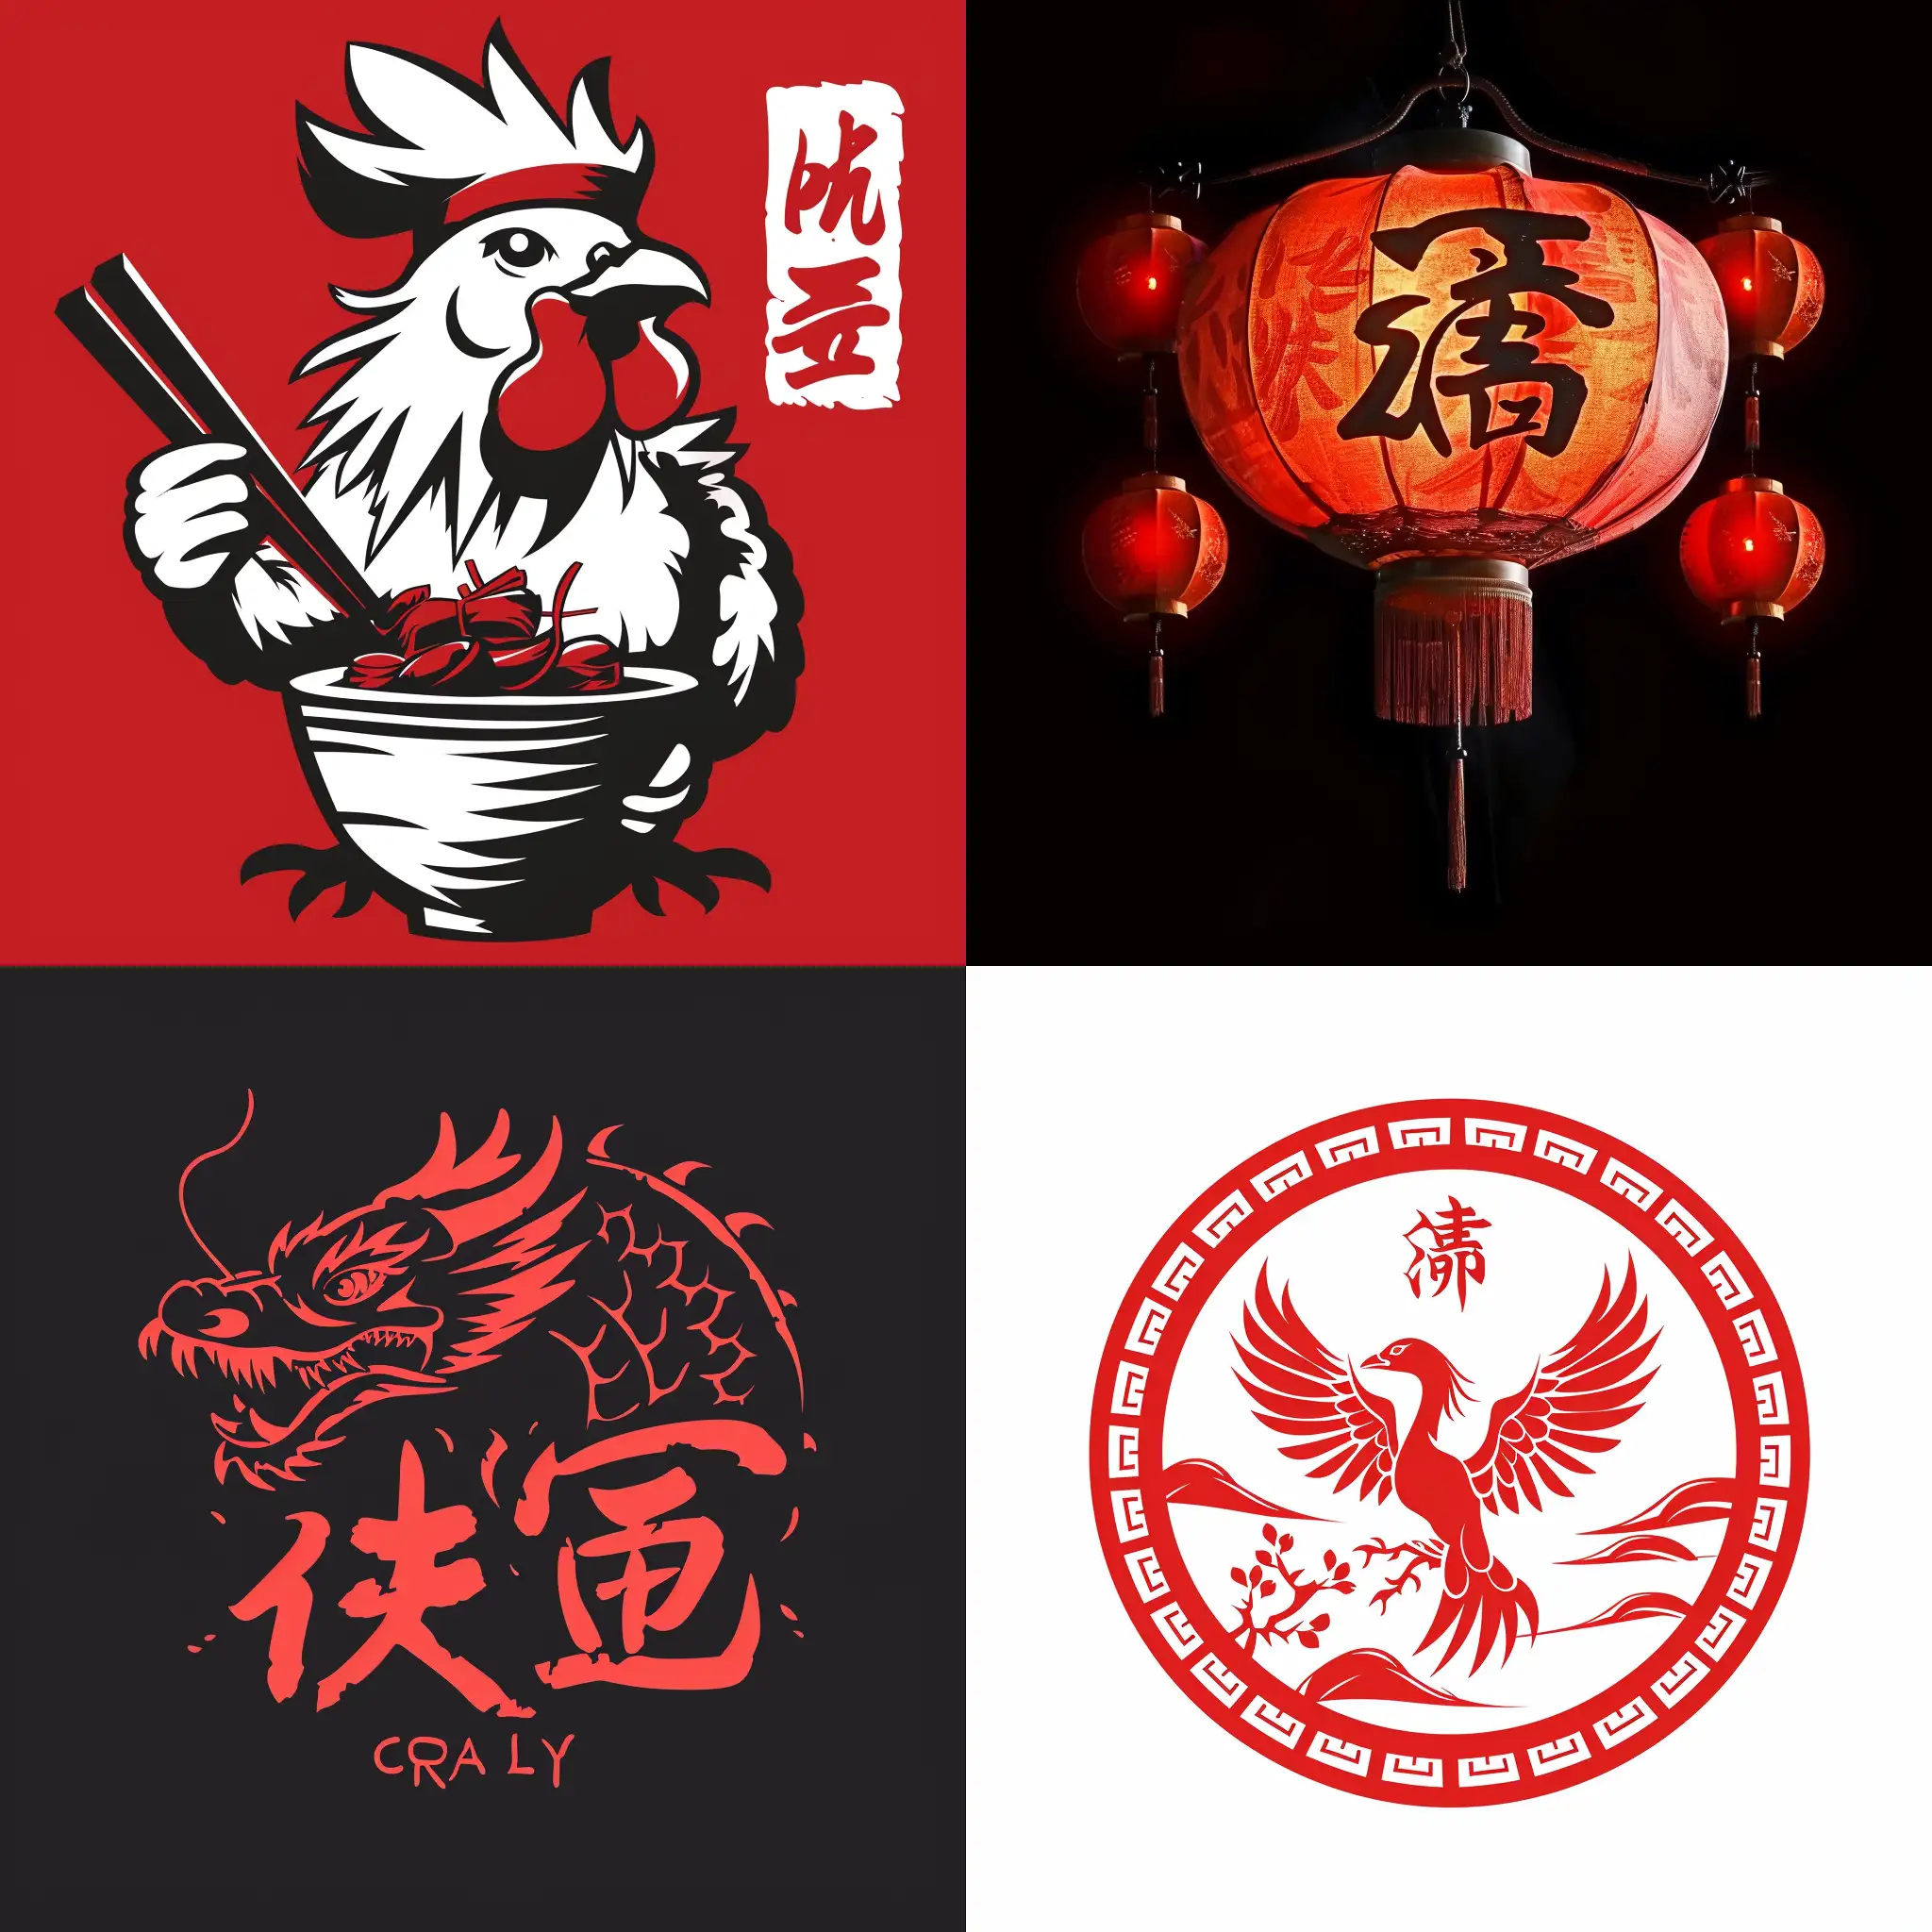 Draw a logo for Chineese fast food company "Cra Li"